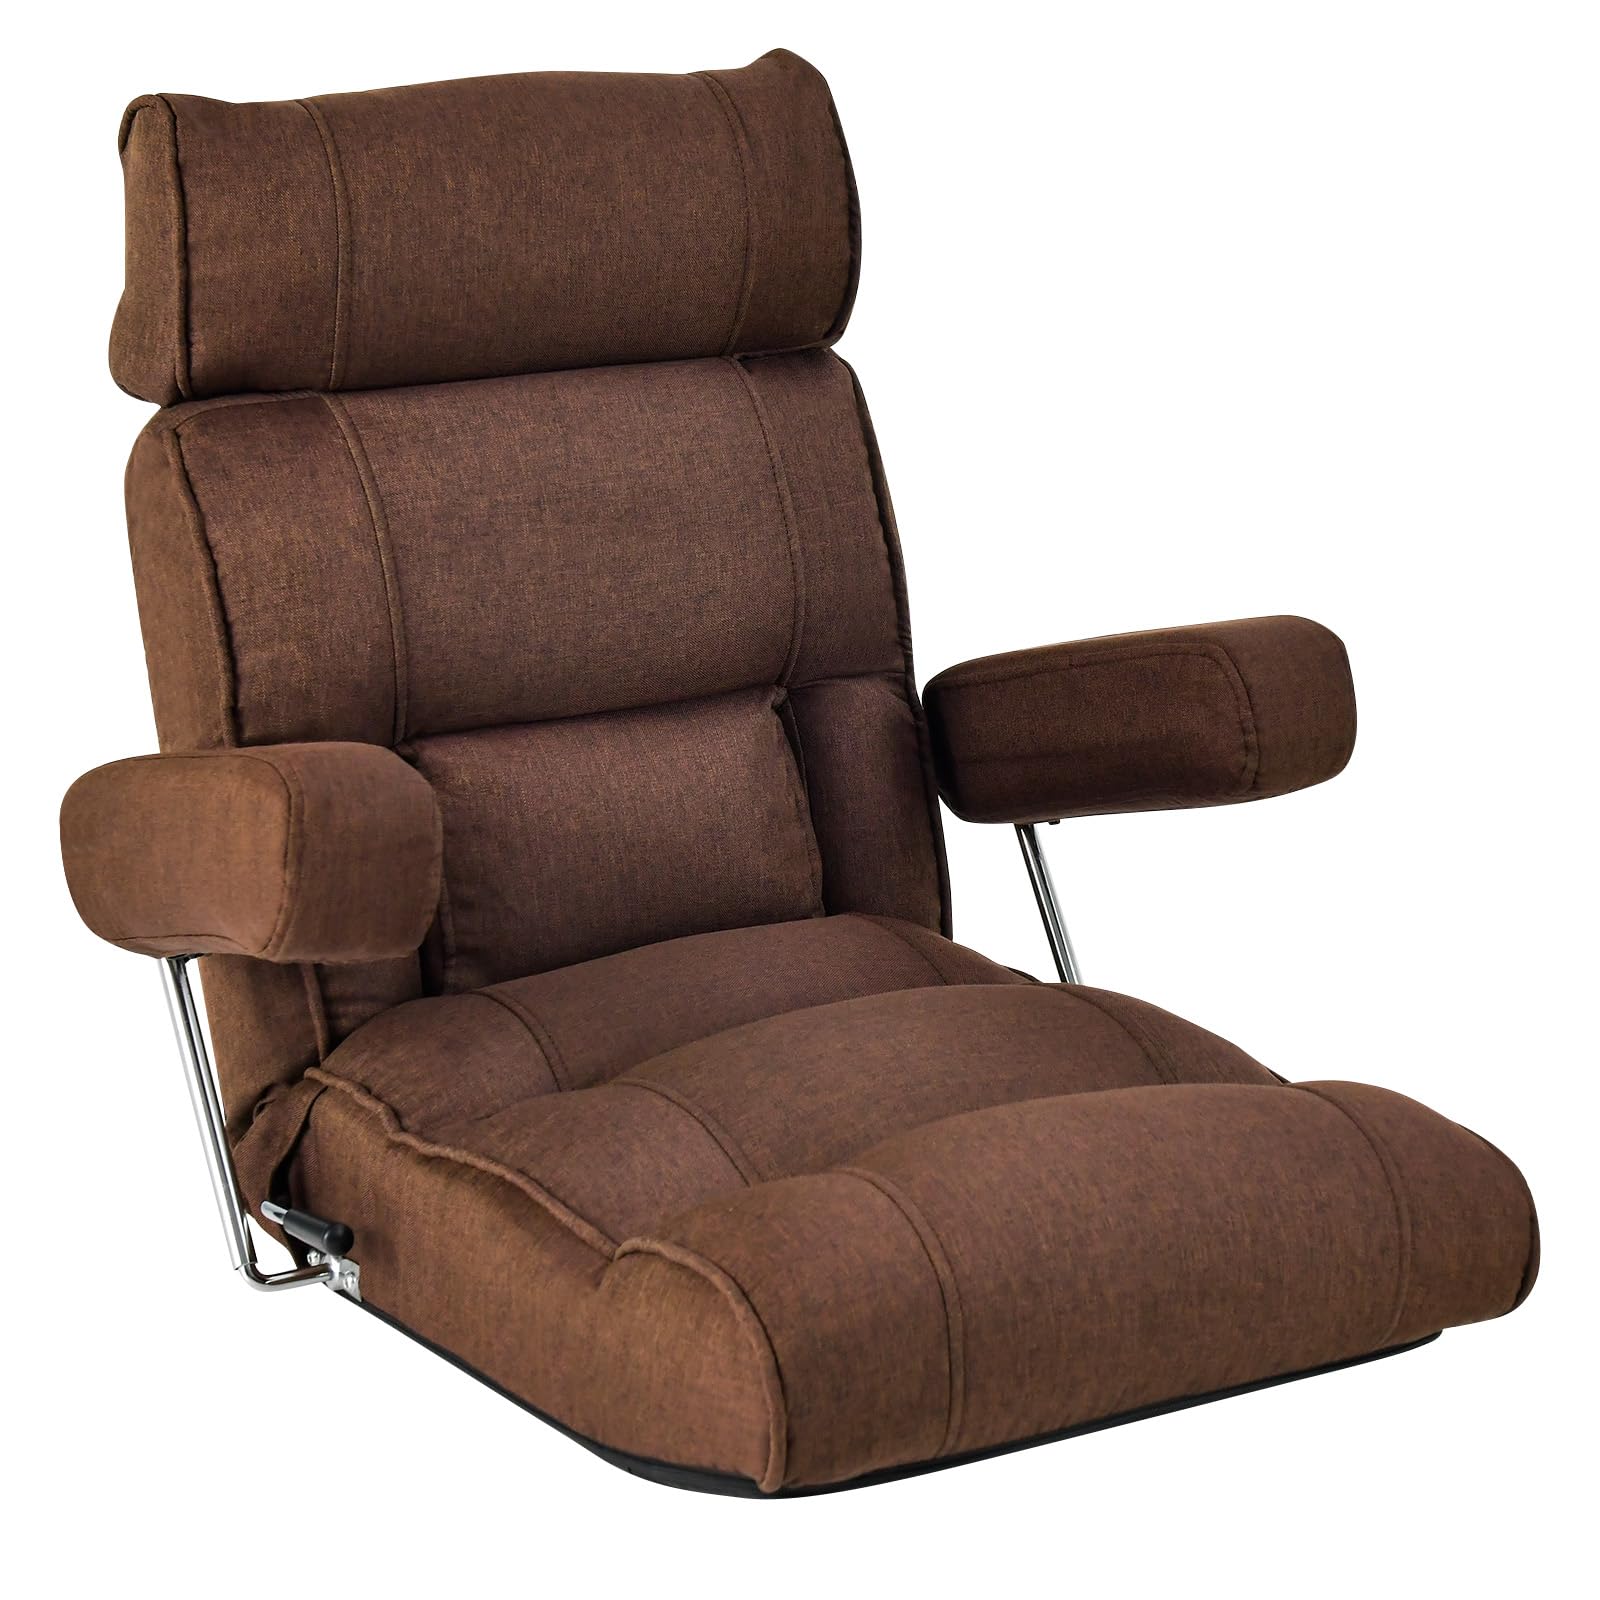  Adjustable Folding Sofa Chair - Giantex